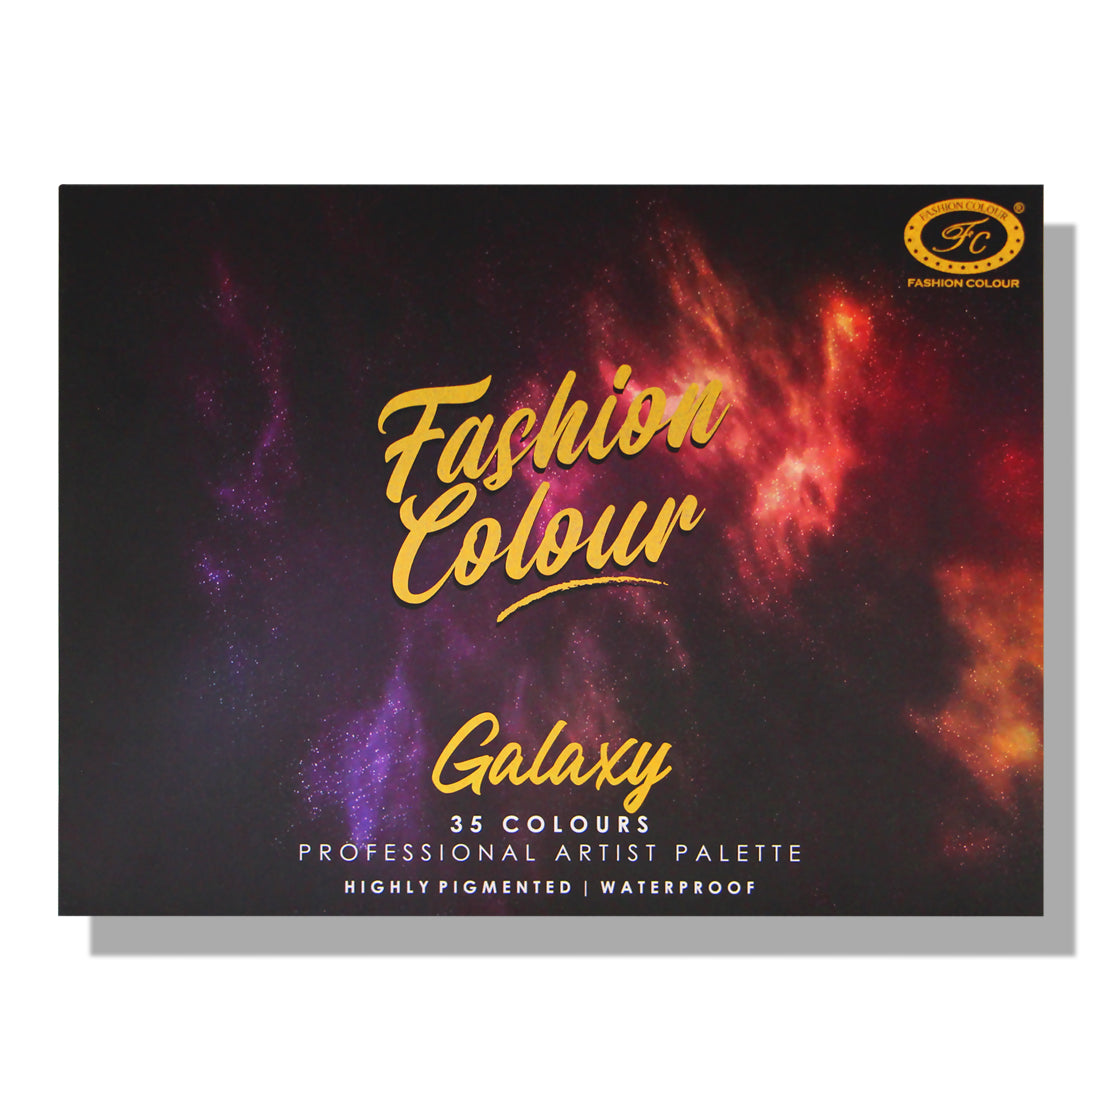 Buy GALAXY 35 Colours Professional Artist Palette  & Get 15 Pcs Professional Makeup Artist Brush Set for Face, Eyes, & Lips